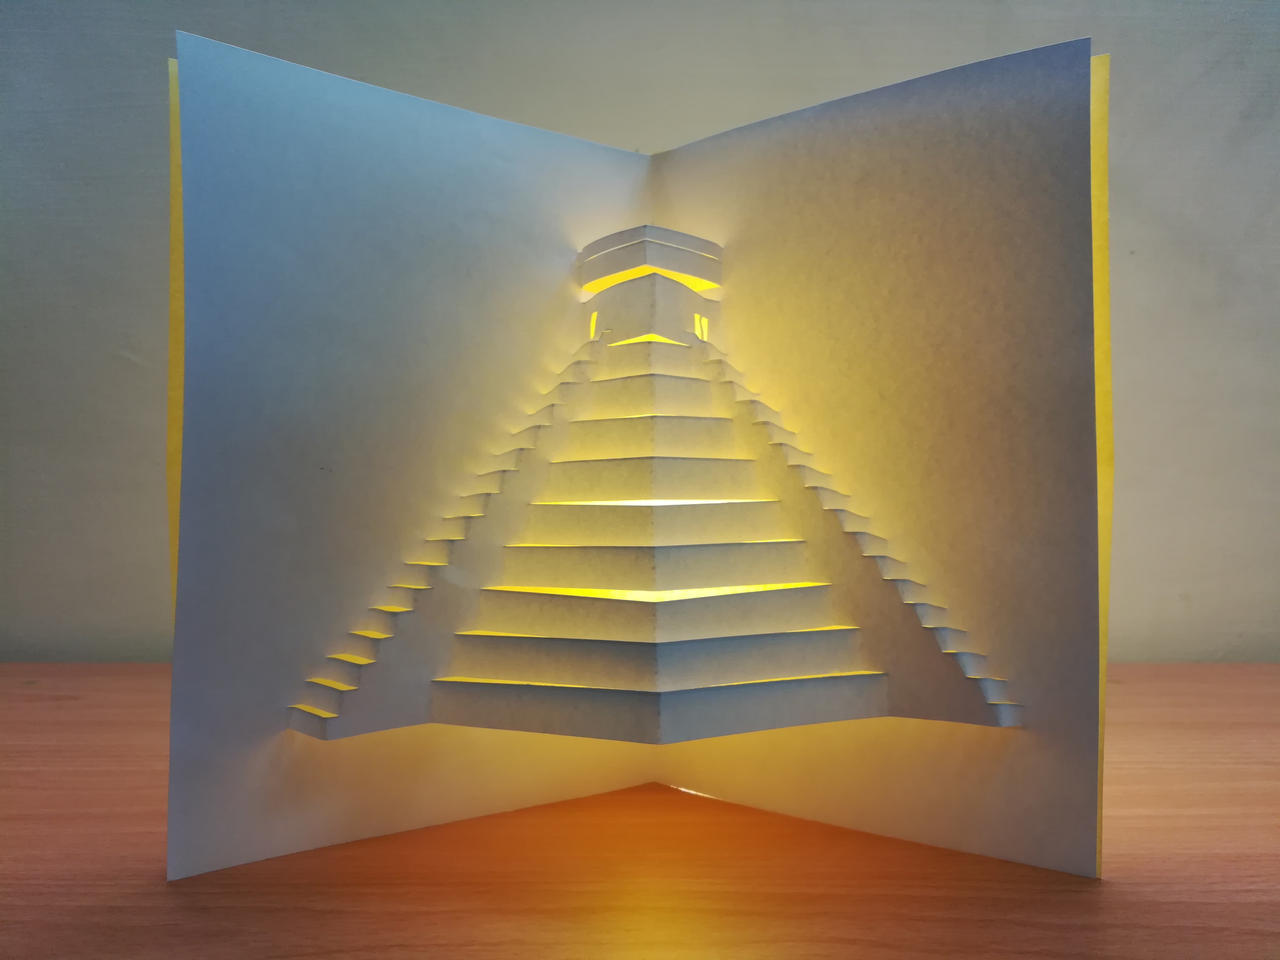 Læge Brink sprogfærdighed 3d pyramid|Pop up pyramid card|paper art|kirigami by JR-PAPER-ART on  DeviantArt